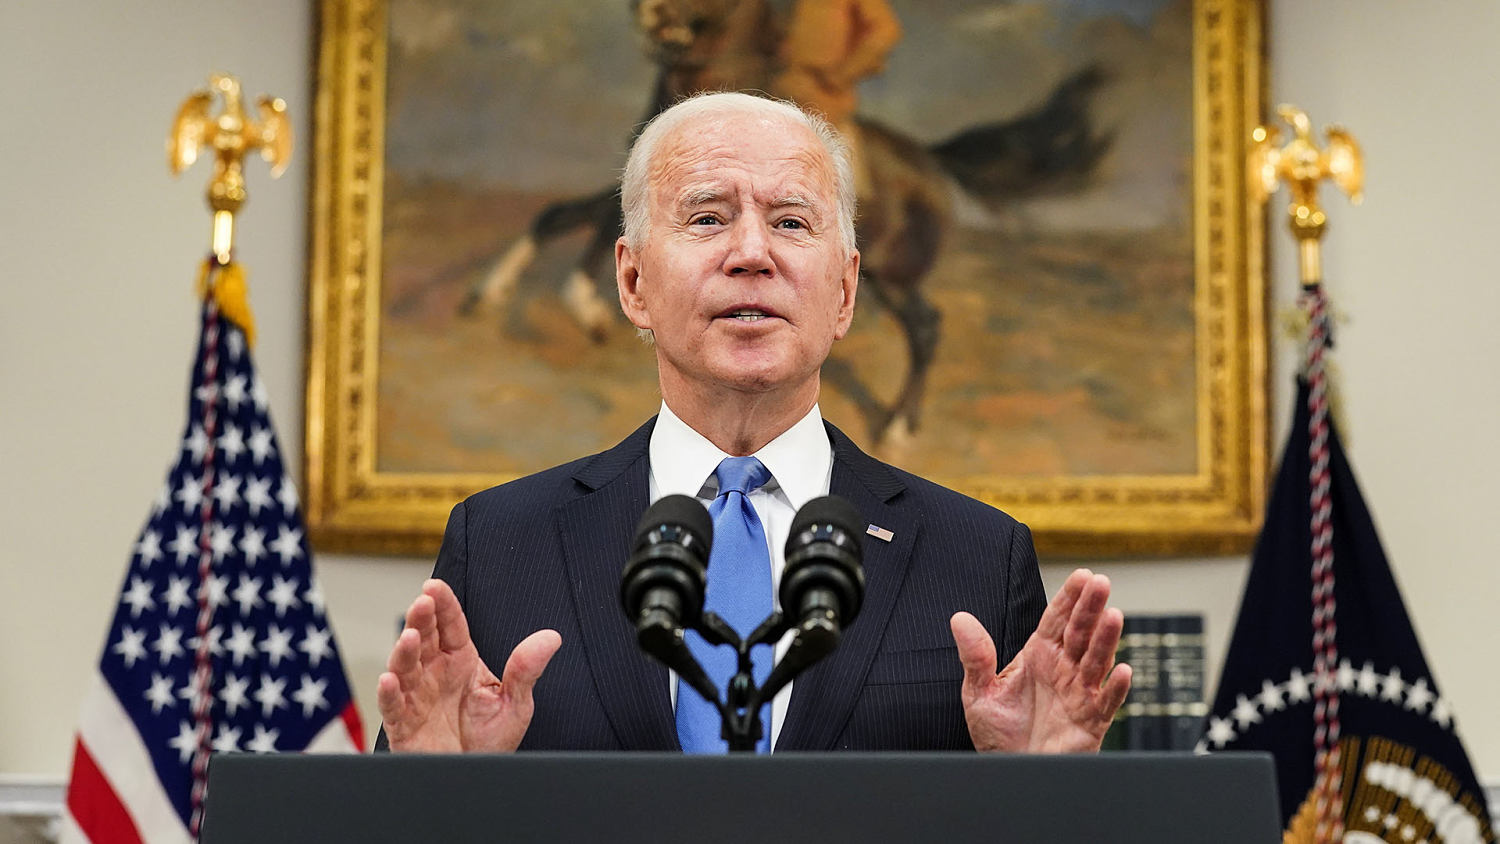 Biden speaks on antisemitism at Holocaust remembrance ceremony